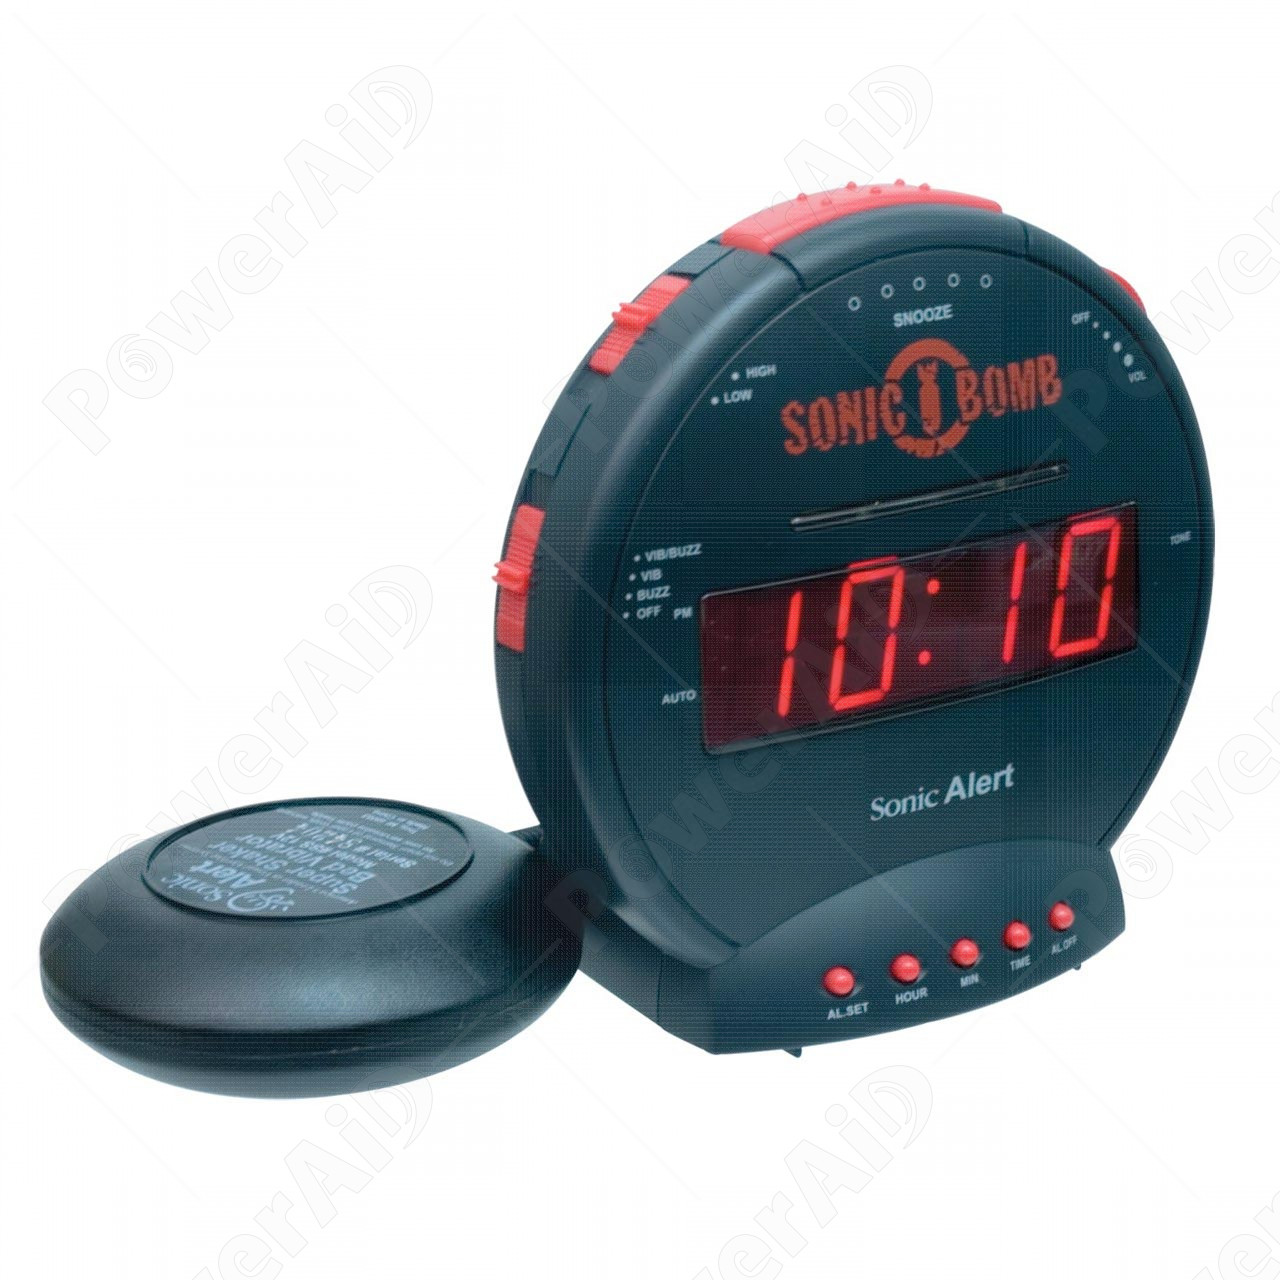 https://www.poweraid.it/media/catalog/product/cache/7/image/60229cad72186bb177a0754534d74a47/s/o/sonic-bomb-alarm-allarme-sveglia-alert-geemarc-vibrazione.jpg